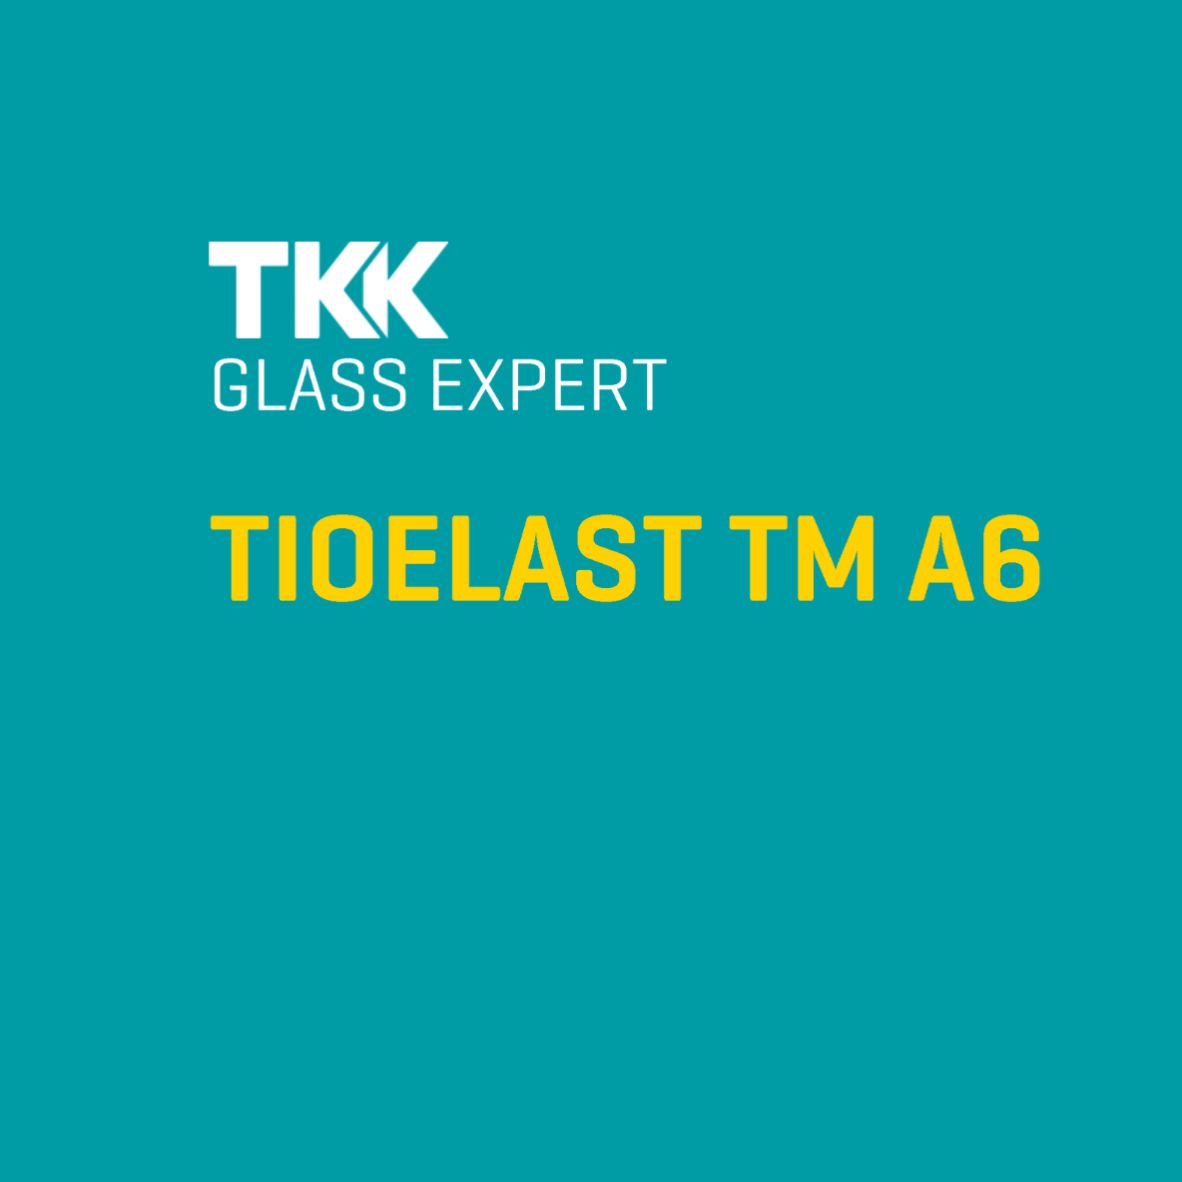 Glass Expert Tioelast Tm A6